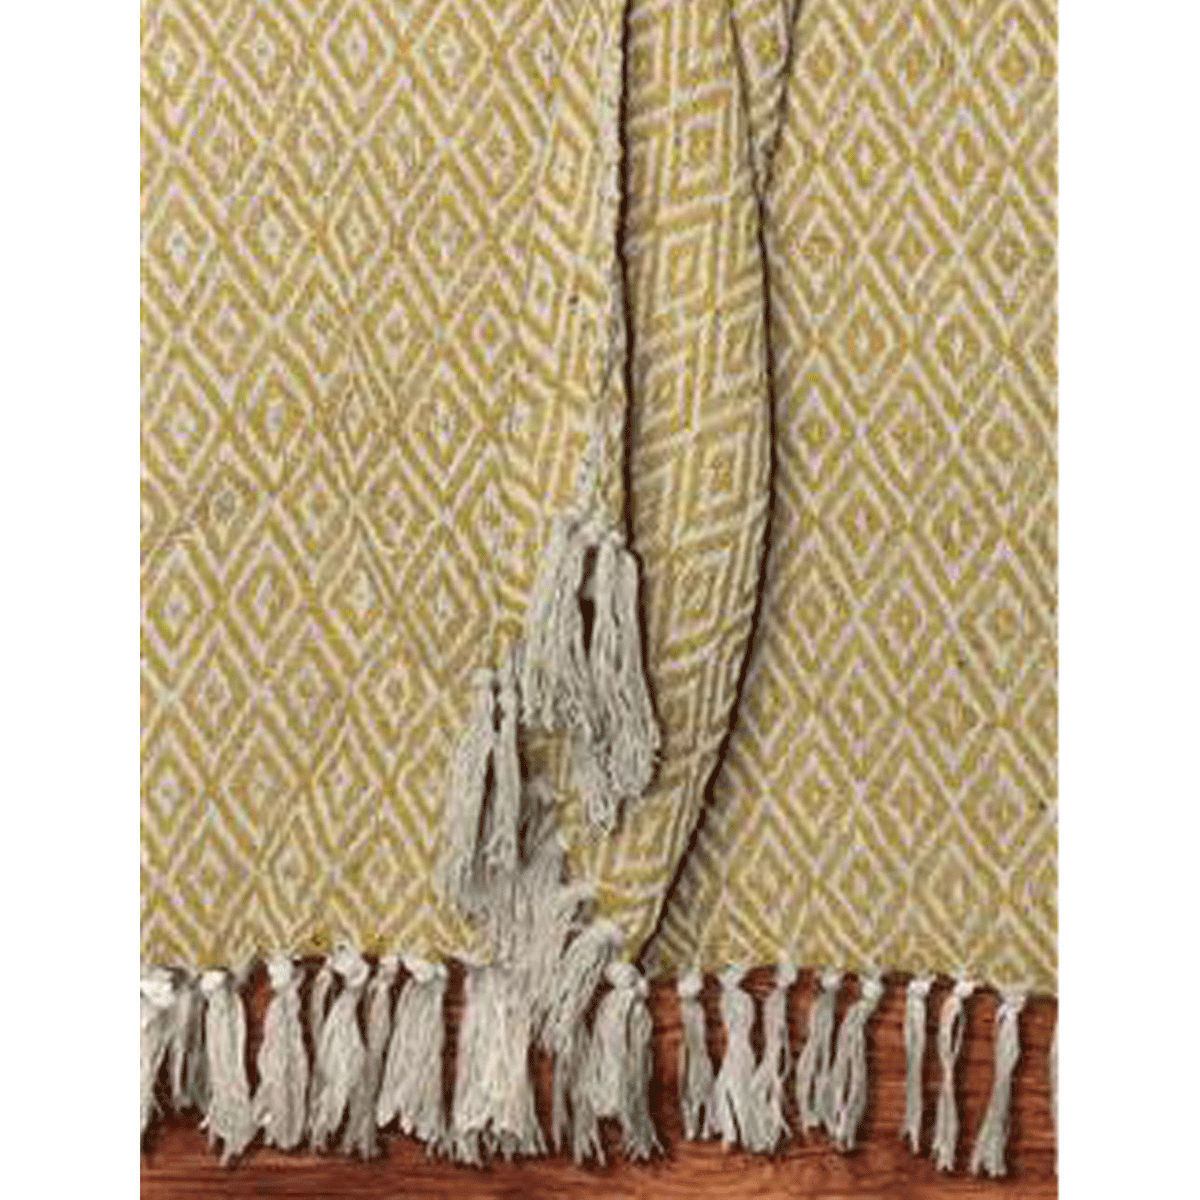 Woven Yellow and Ecru Cotton Throw - Pillows & Blankets